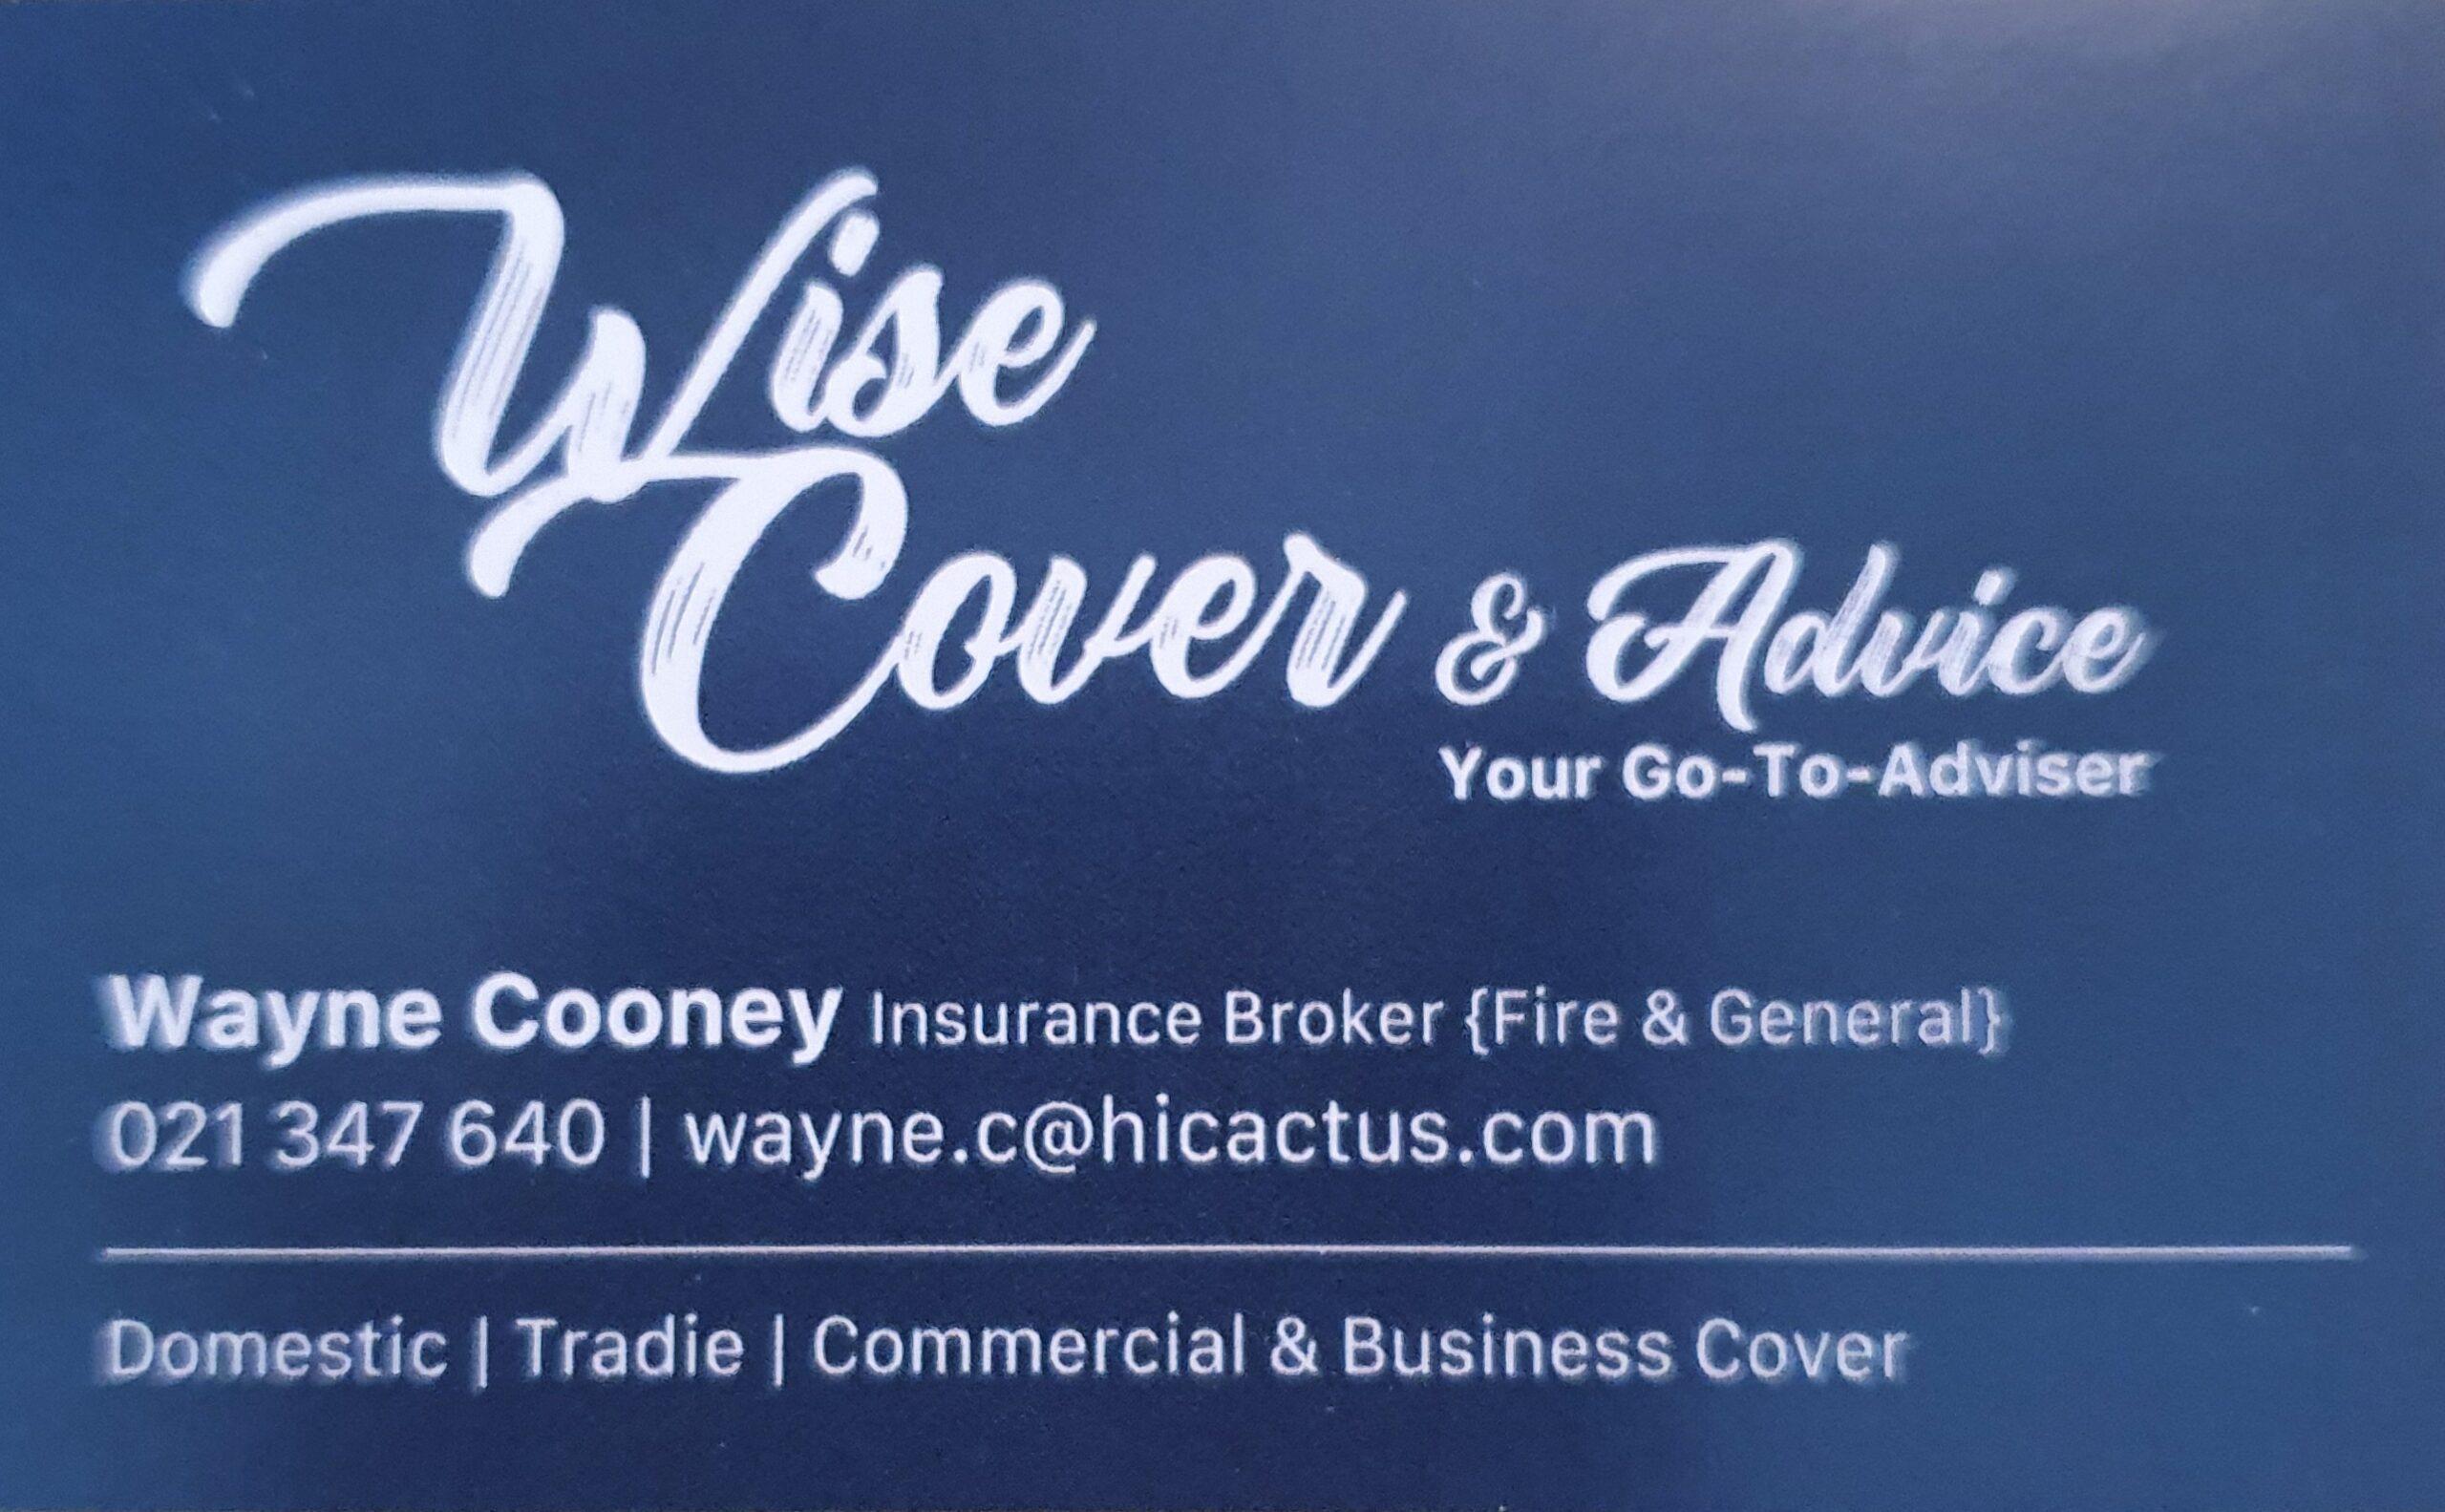 Cambridge Insurance Broker Wayne Cooney’s Commercial Cover Advice